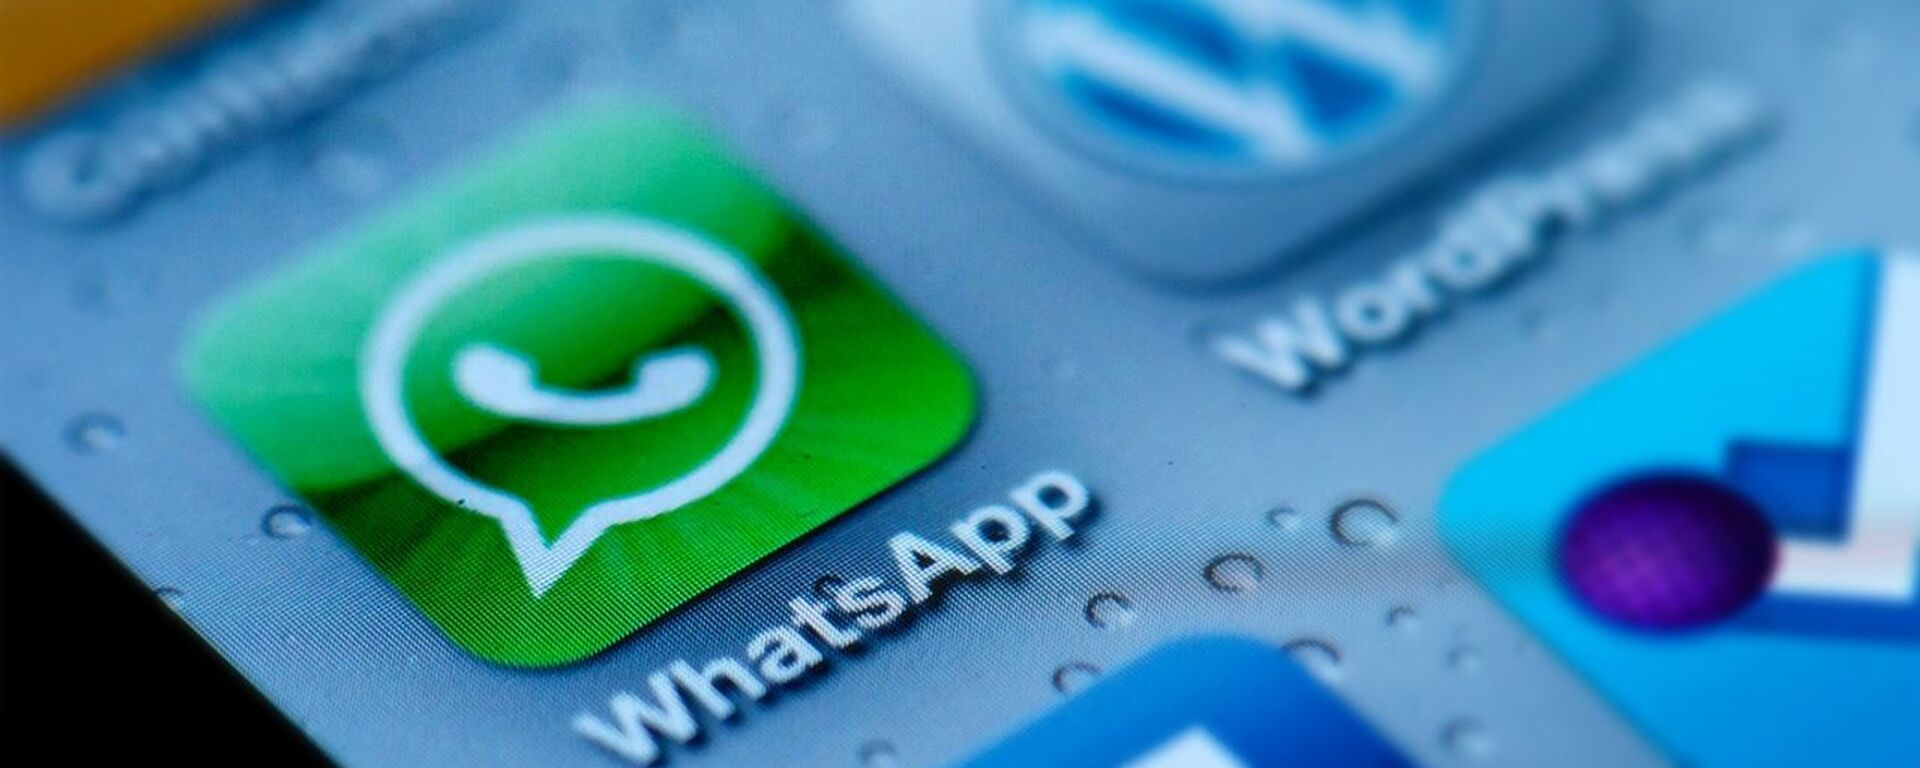  WhatsApp واتساب - سبوتنيك عربي, 1920, 19.02.2021